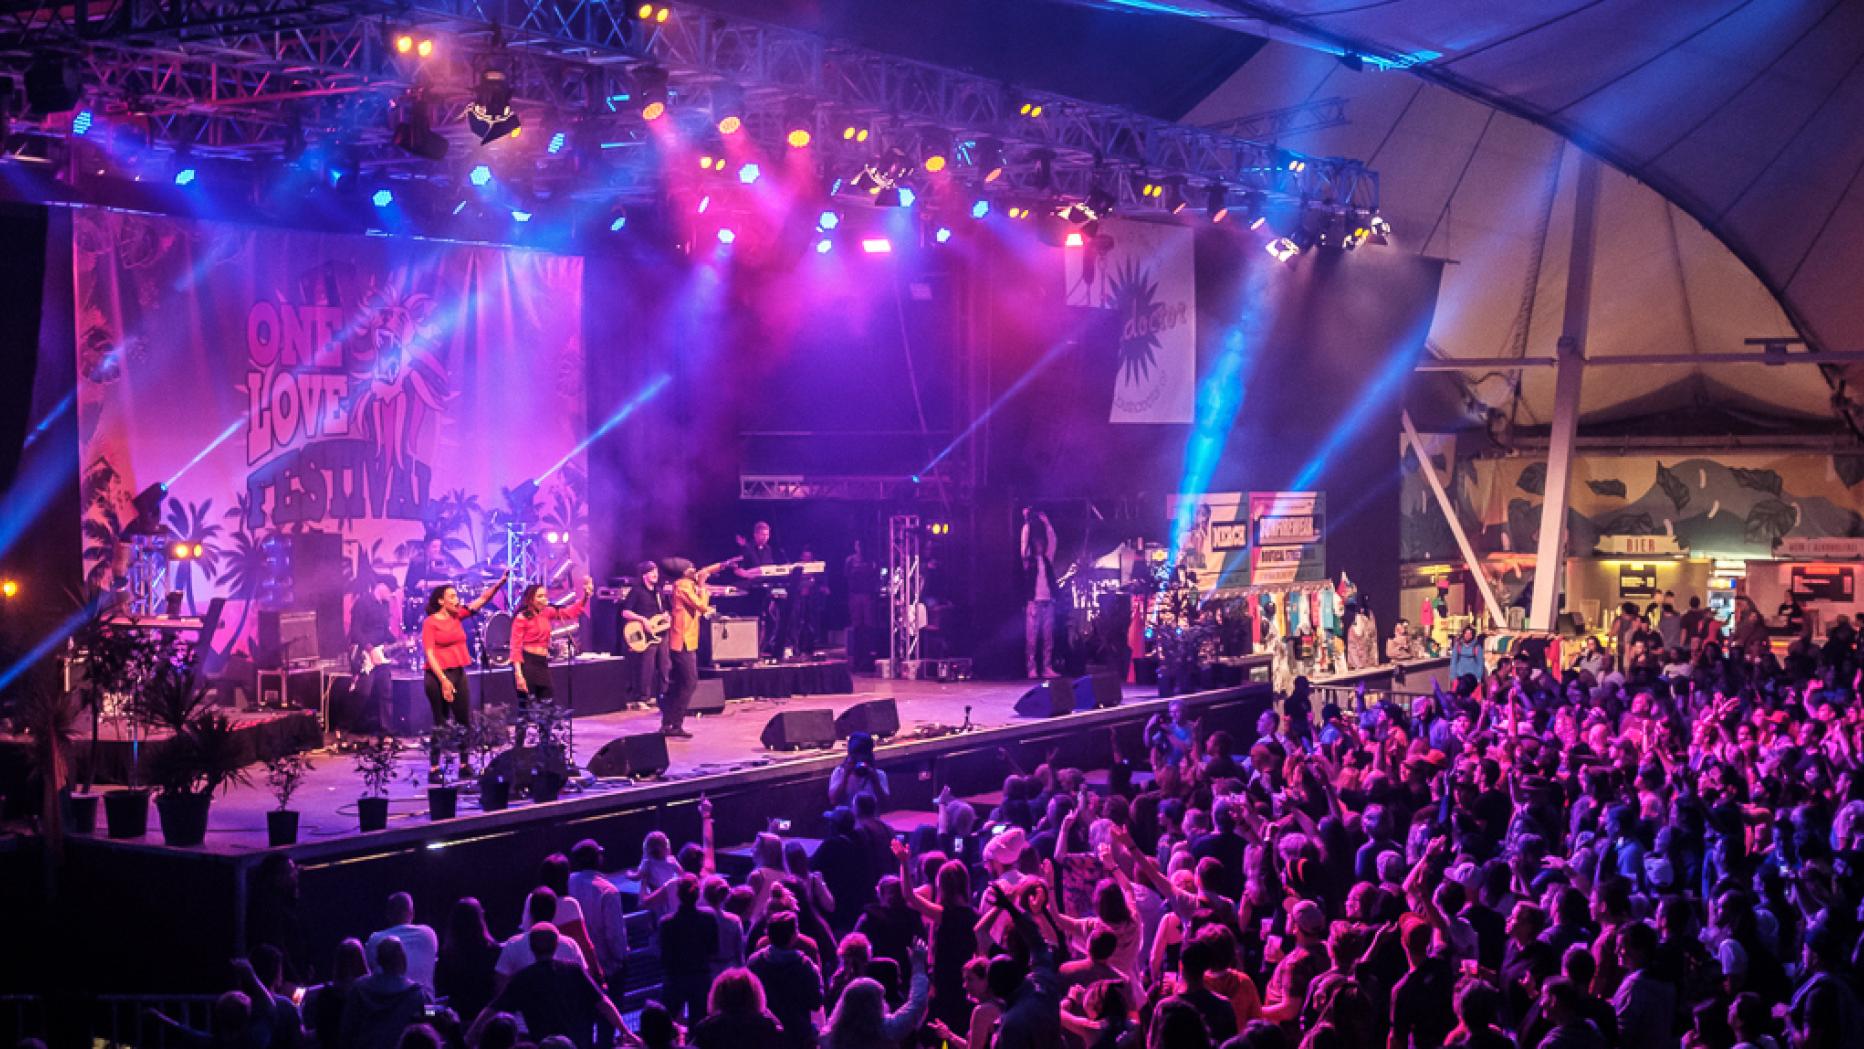 ReggaeReigen Anfang August wieder "One Love Festival" in Wiesen